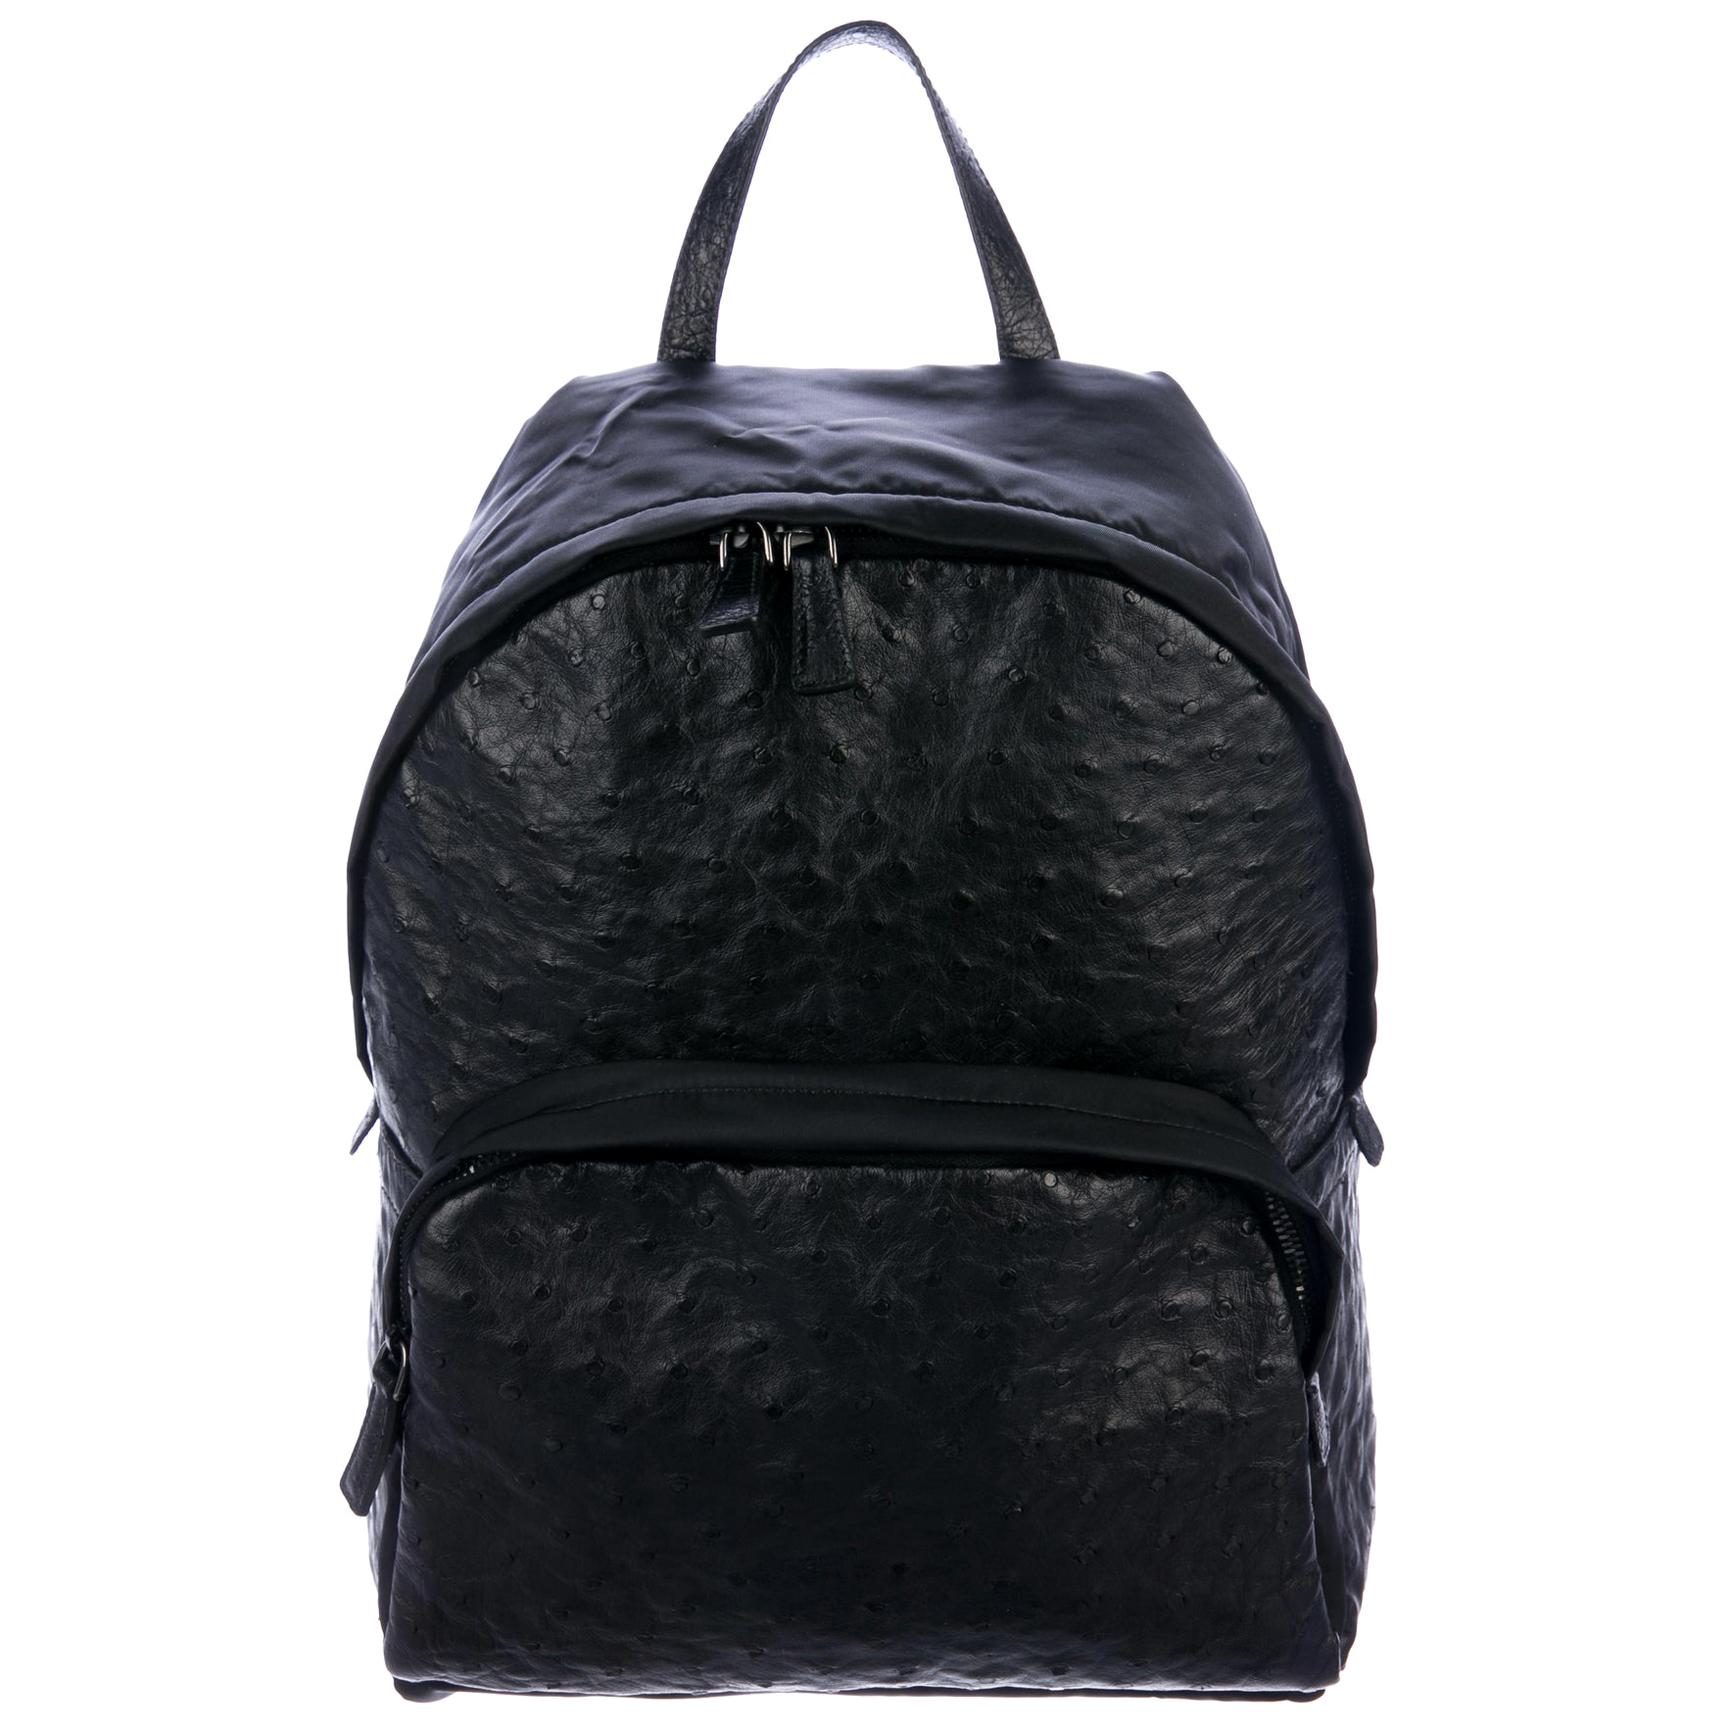 Prada NEW Black Ostrich Exotic Leather Top Handle Travel Weekender Backpack Bag